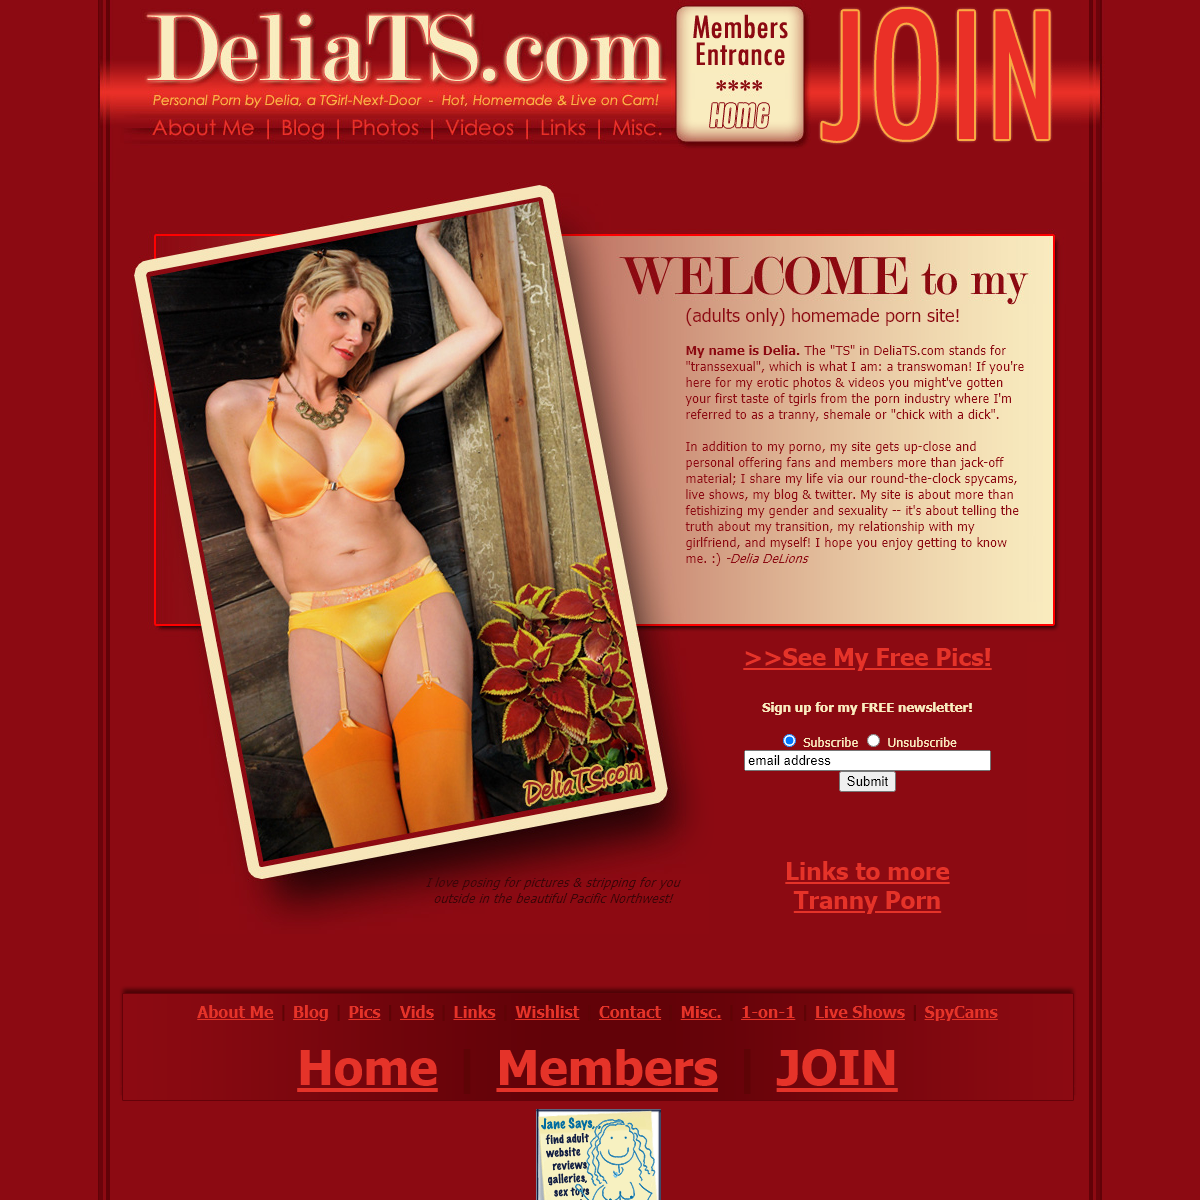 A complete backup of www.deliats.com